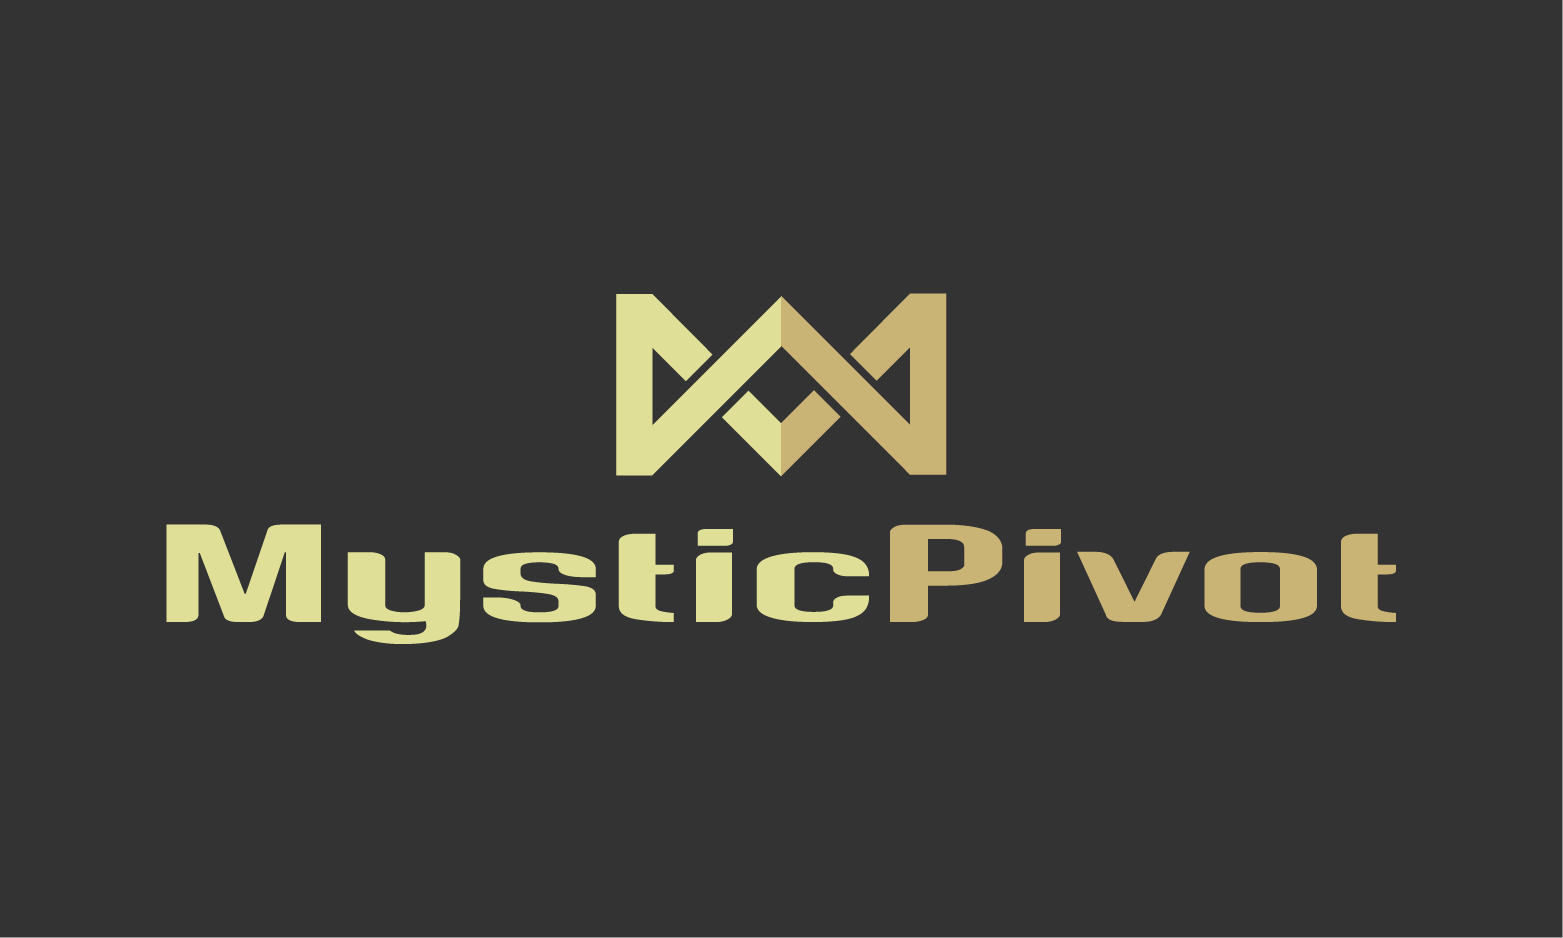 MysticPivot.com - Creative brandable domain for sale